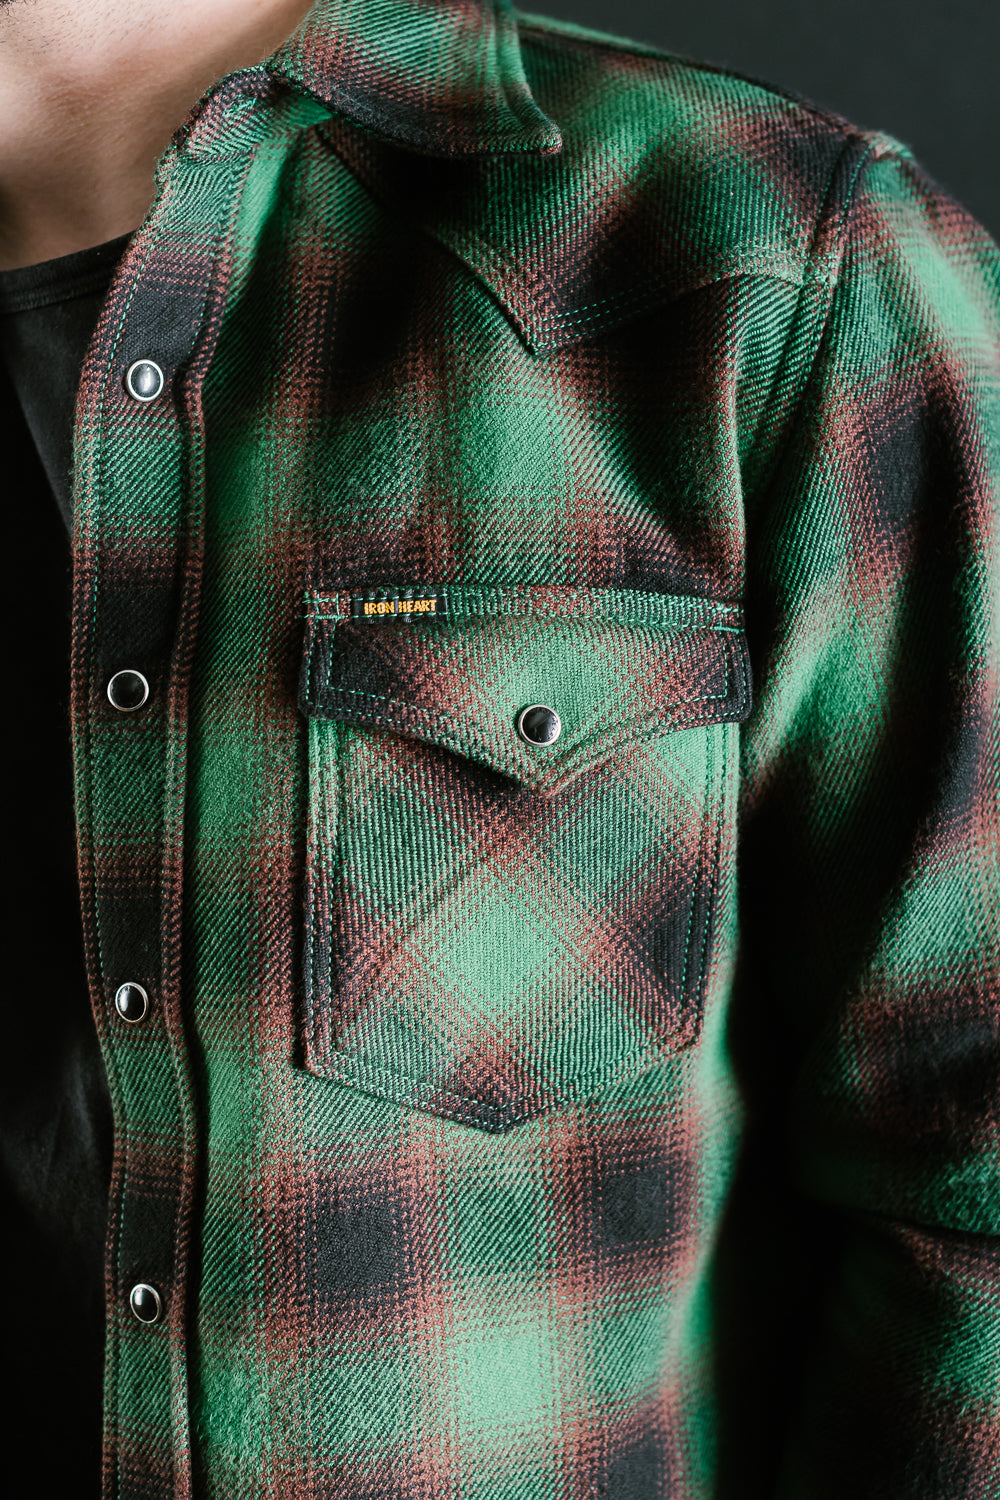 IHSH-373-GRN - Ultra Heavy Flannel Ombré Check Western Shirt - Green